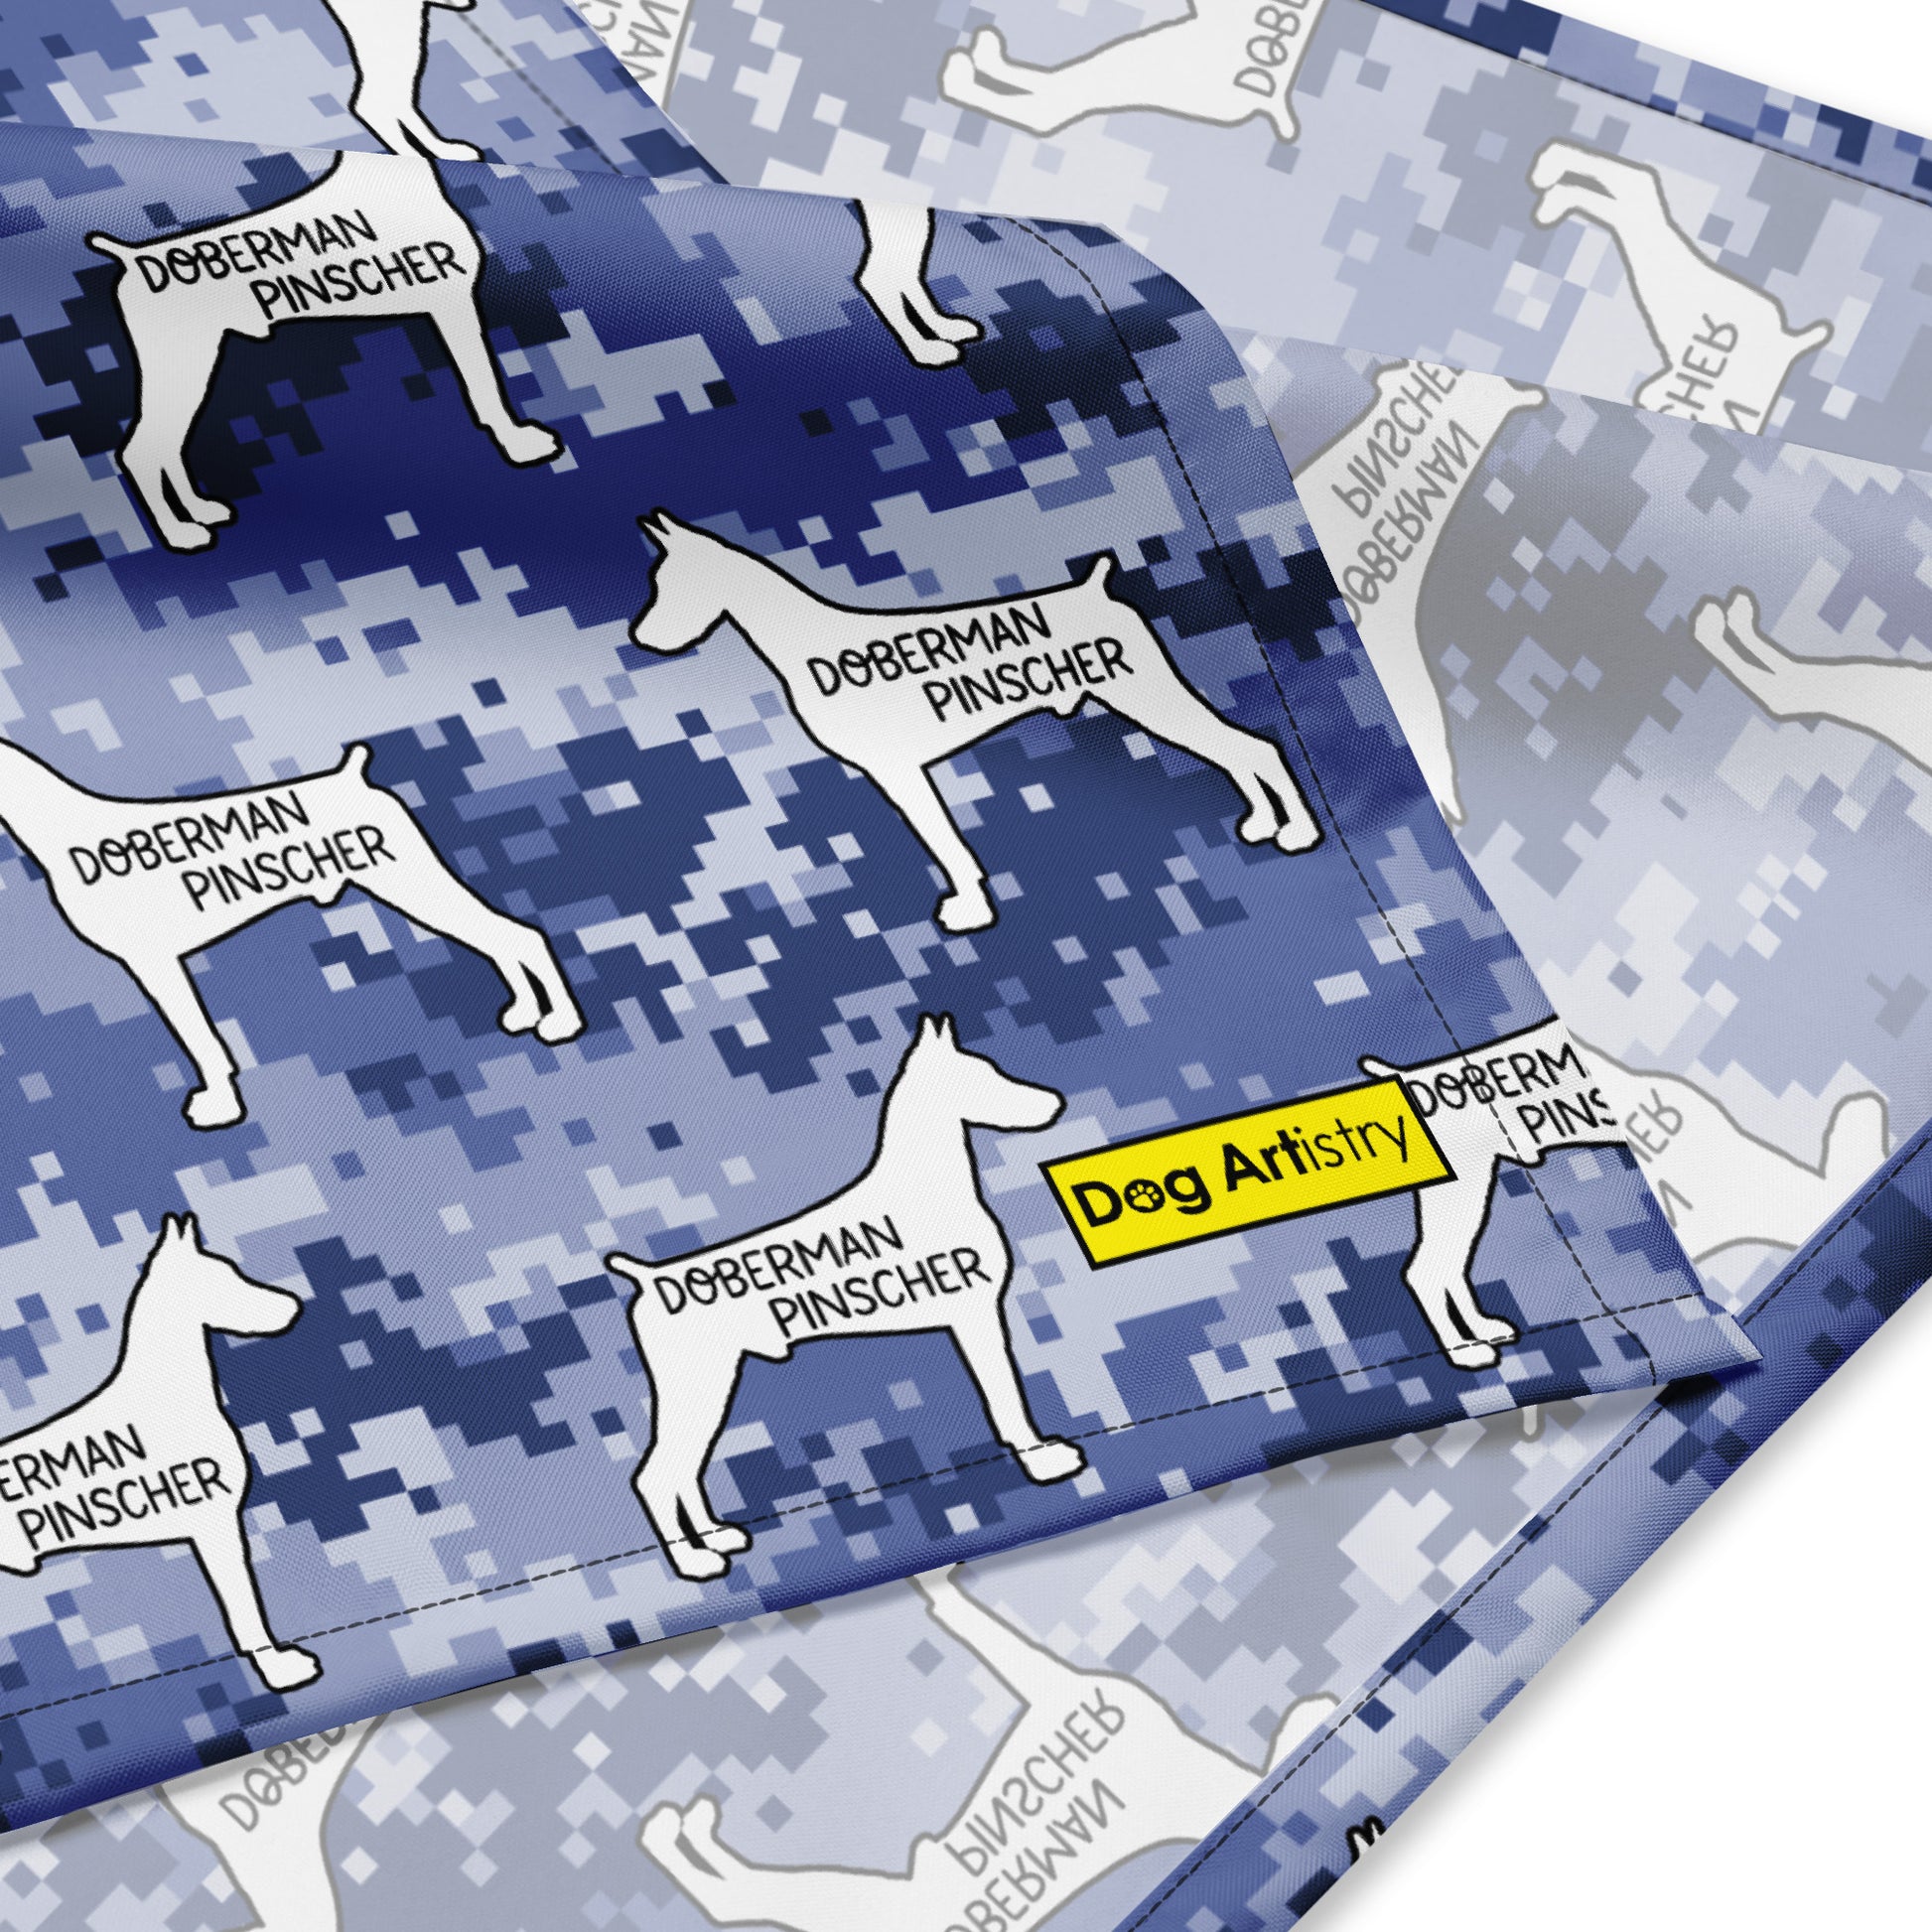 Doberman Pinscher camouflage bandana by Dog Artistry